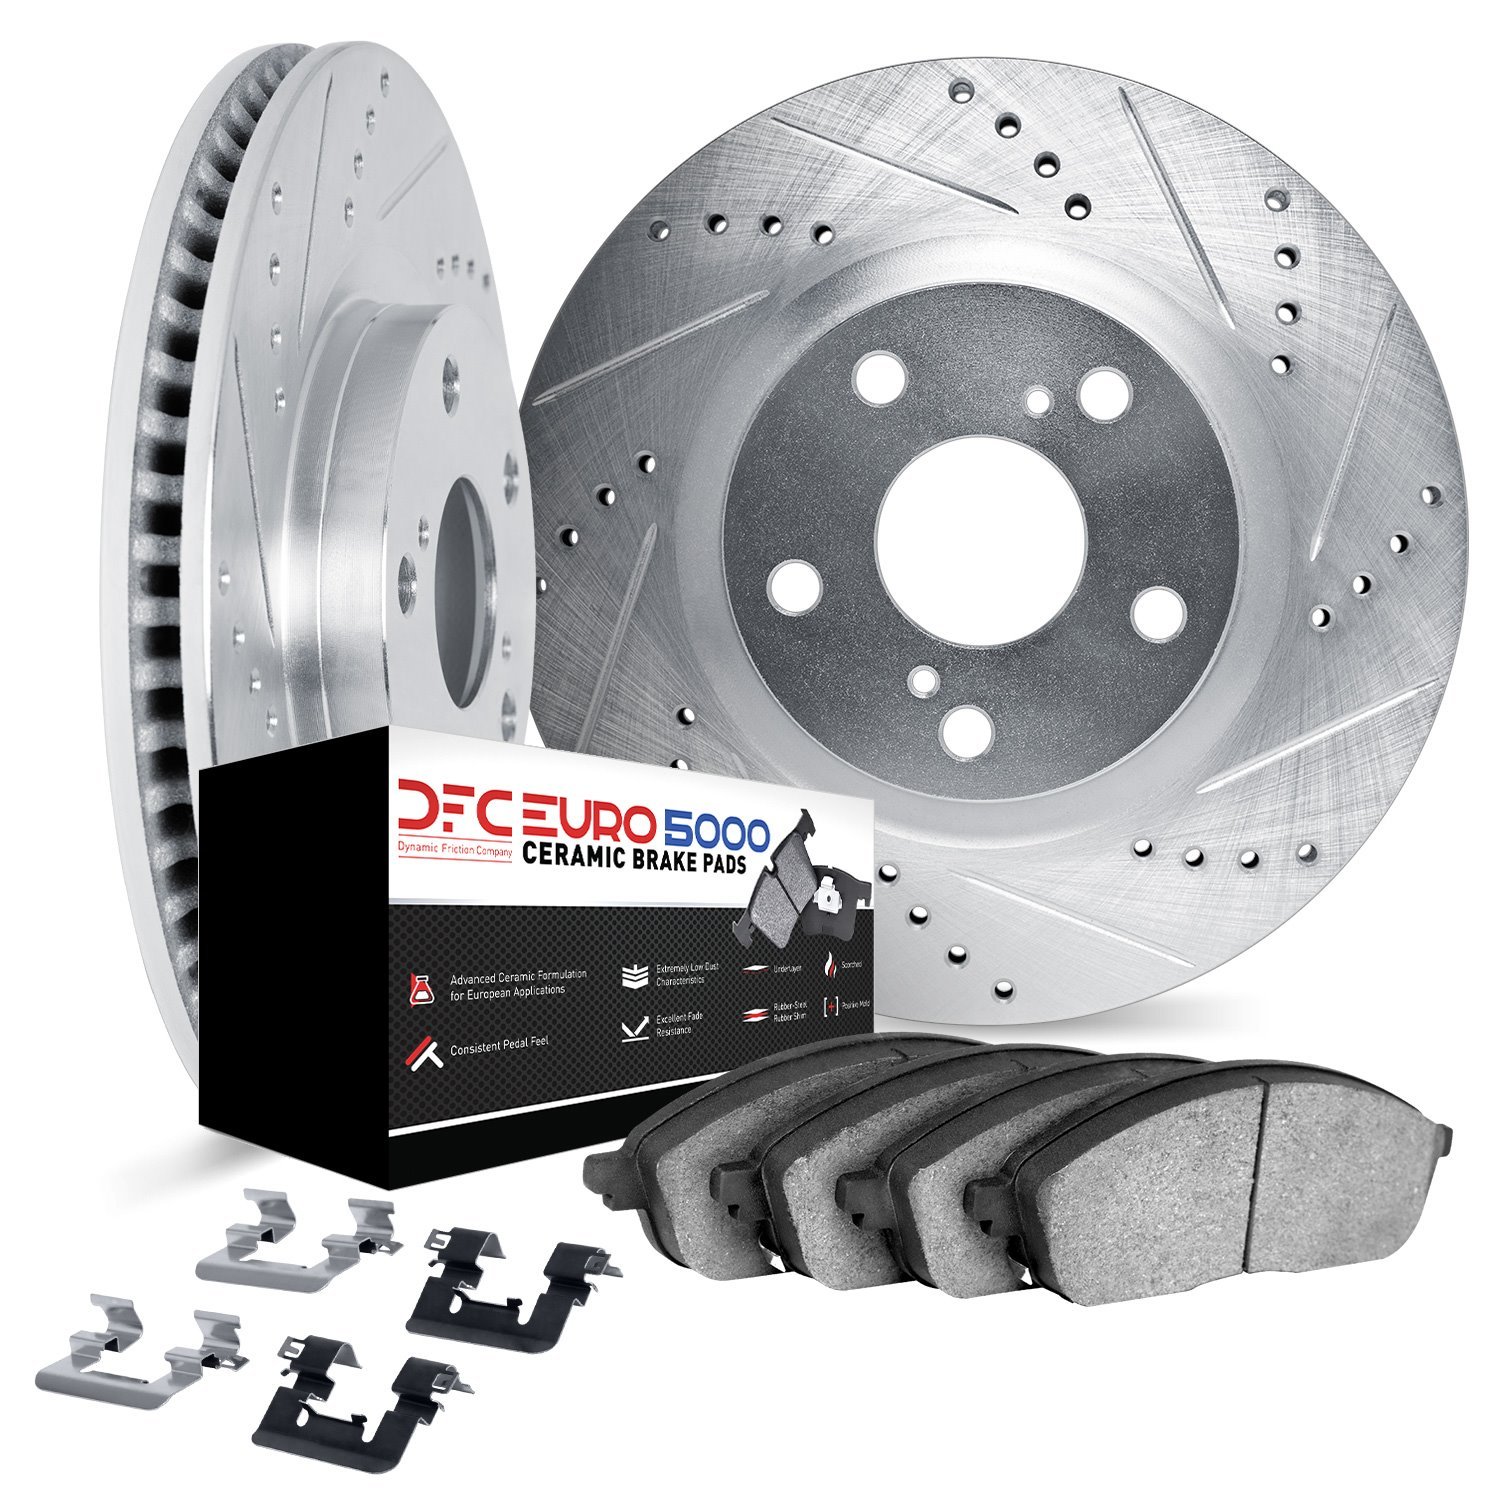 7612-31121 Drilled/Slotted Brake Rotors w/5000 Euro Ceramic Brake Pads Kit & Hardware [Silver], Fits Select Multiple Makes/Model